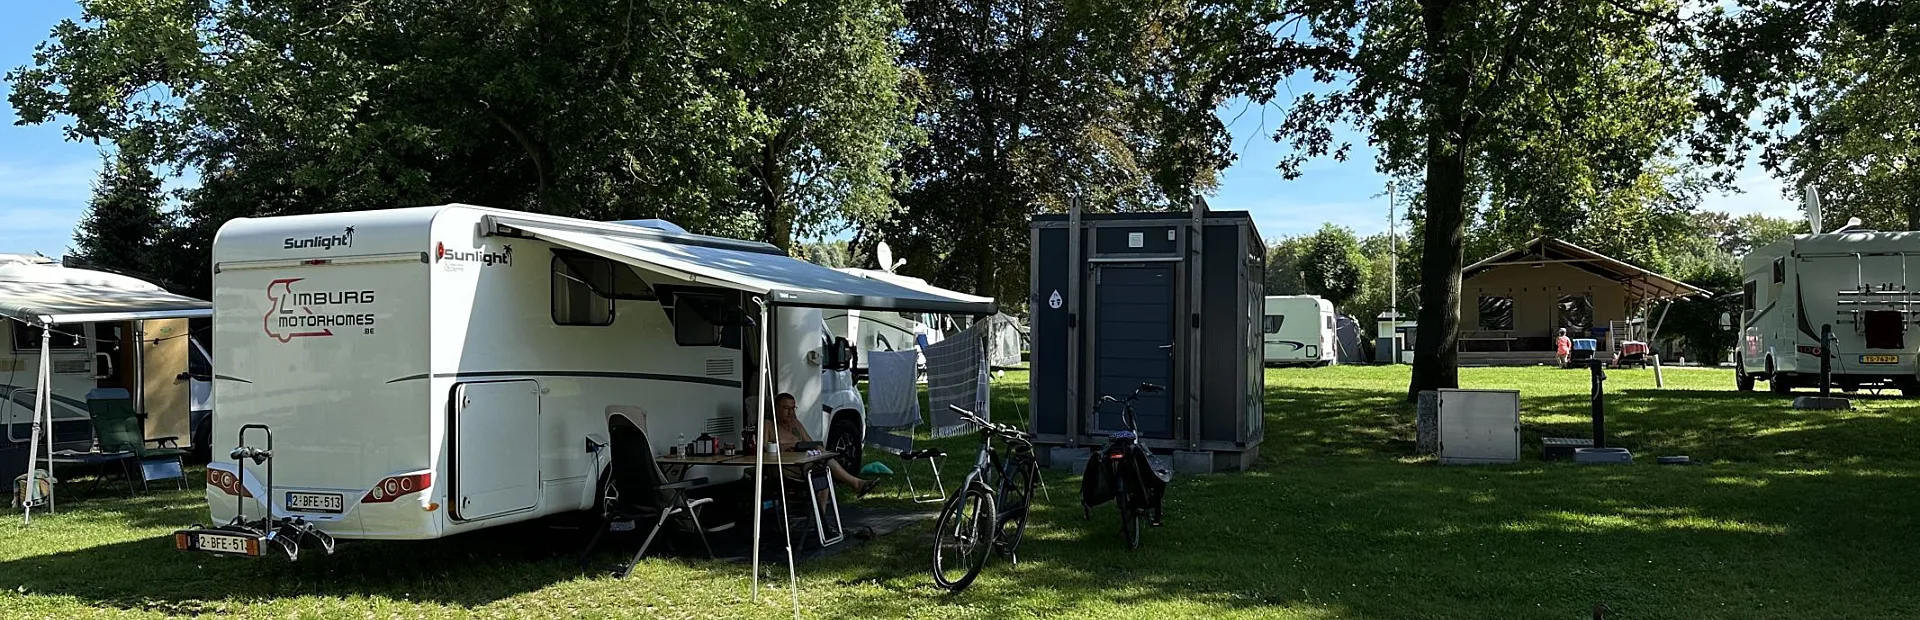 Naturistencamping Nederland camperplaats met prive sanitair 8